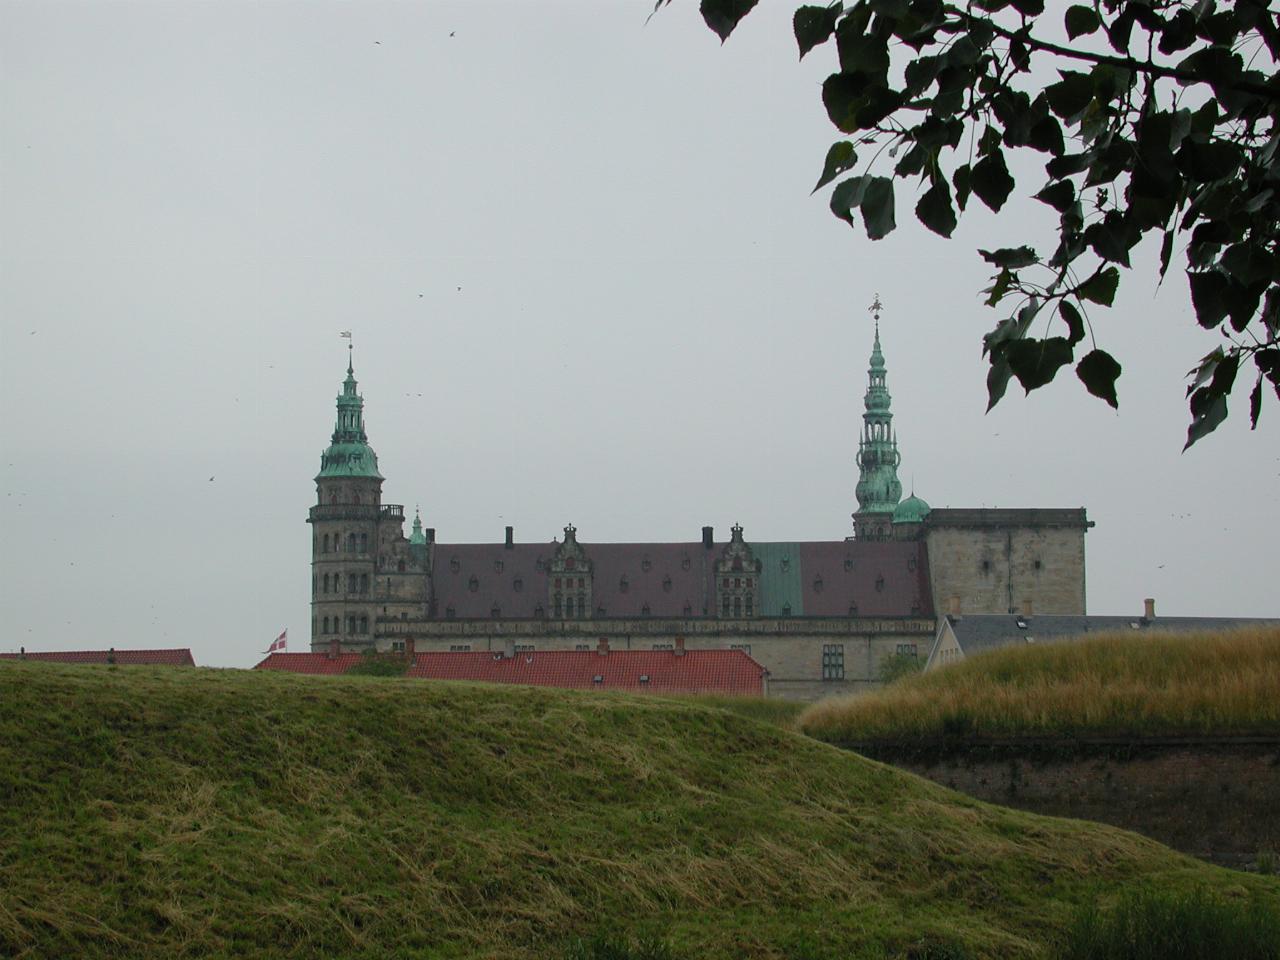 KPLU Viking Jazz: Helsingør Slot (Castle),  the home of Shakespeare's fictional 